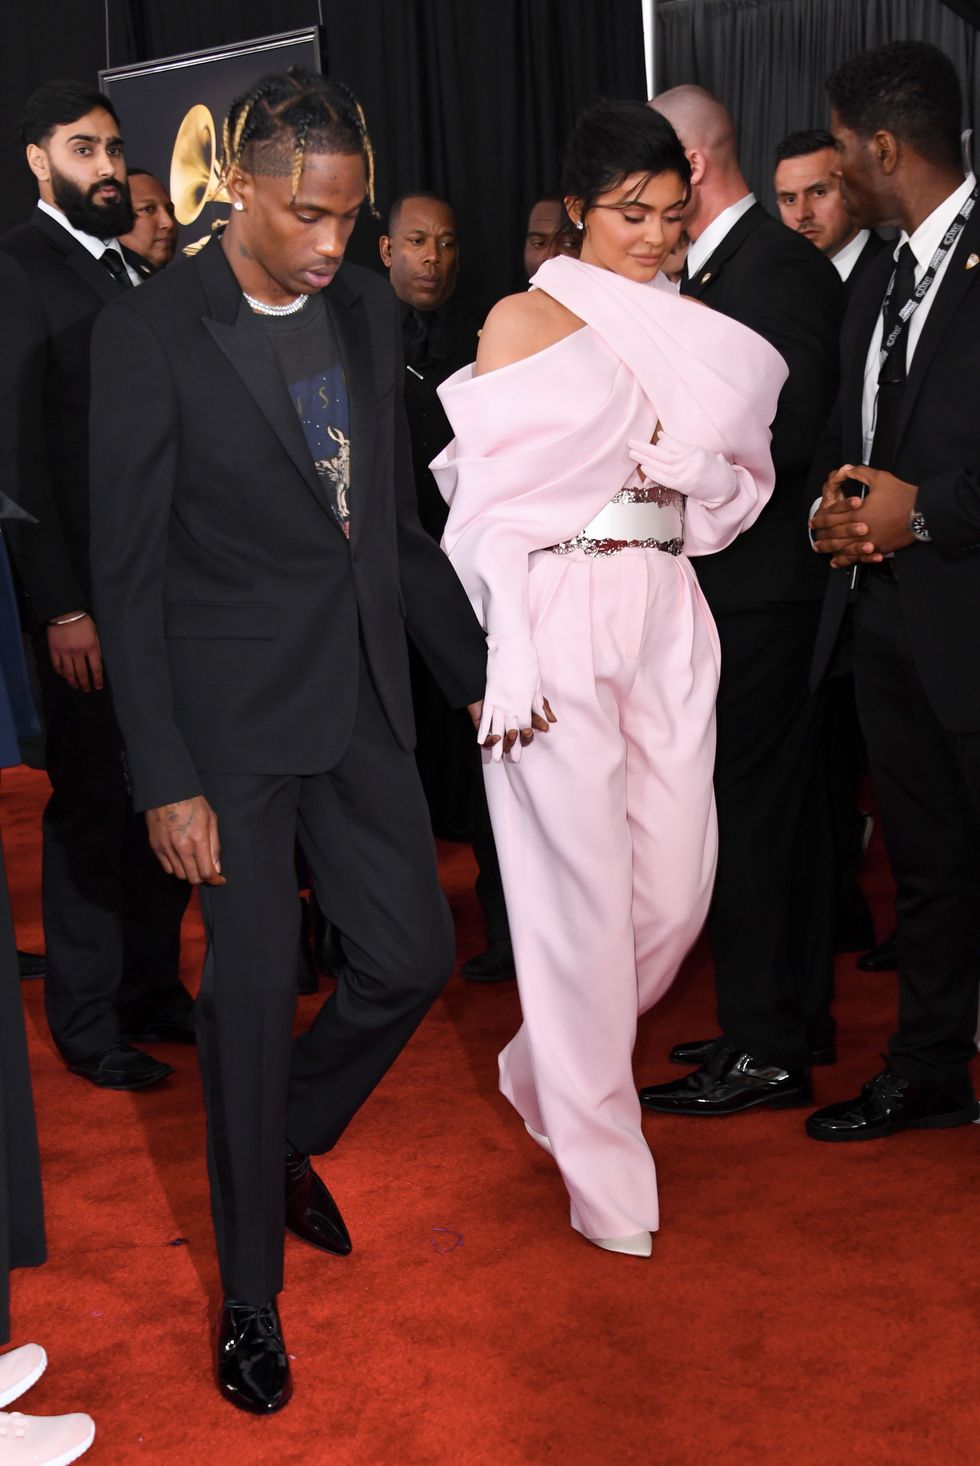 Kylie Jenner and Travis Scott Bring Power to Met Gala Red Carpet